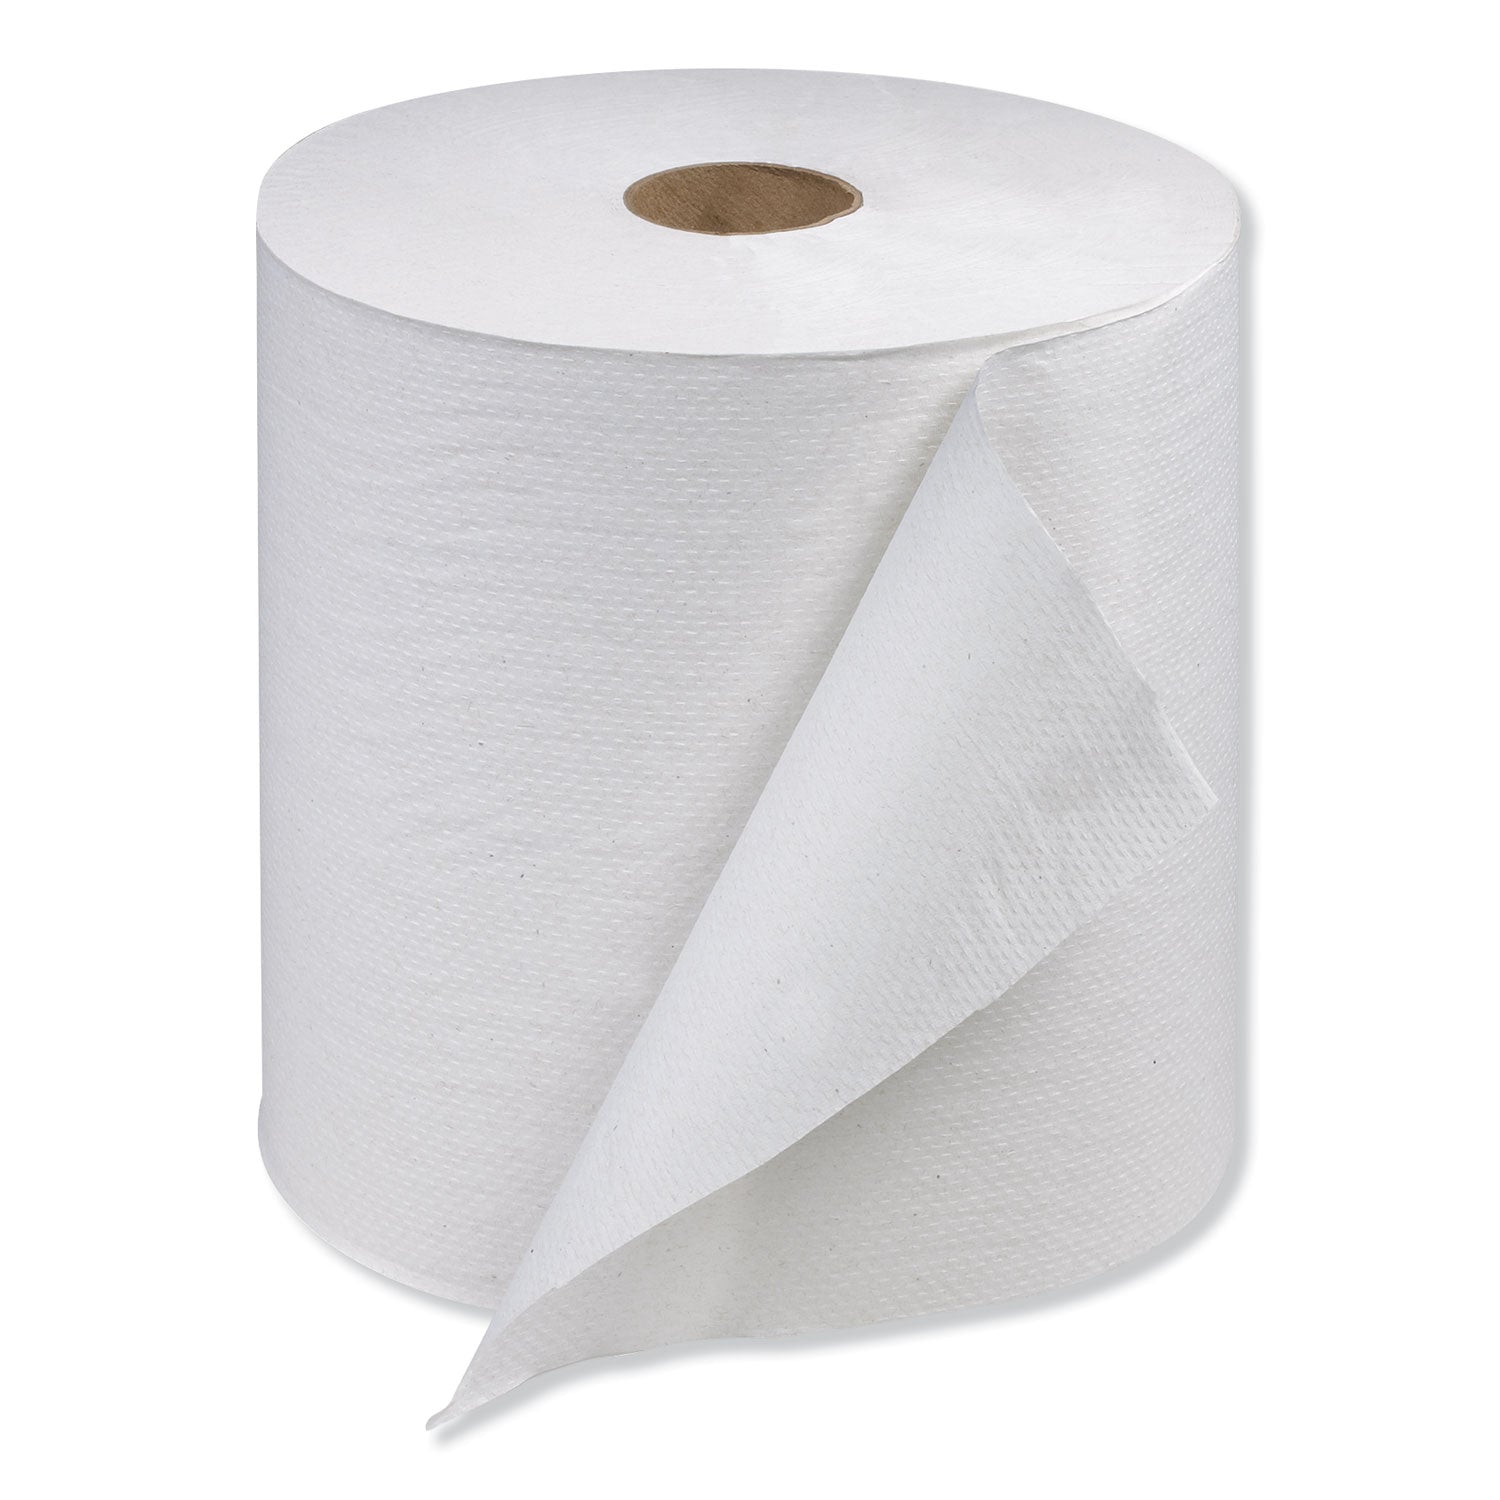 hardwound-roll-towel-1-ply-788-x-1000-ft-white-6-rolls-carton_trkrb10002 - 6